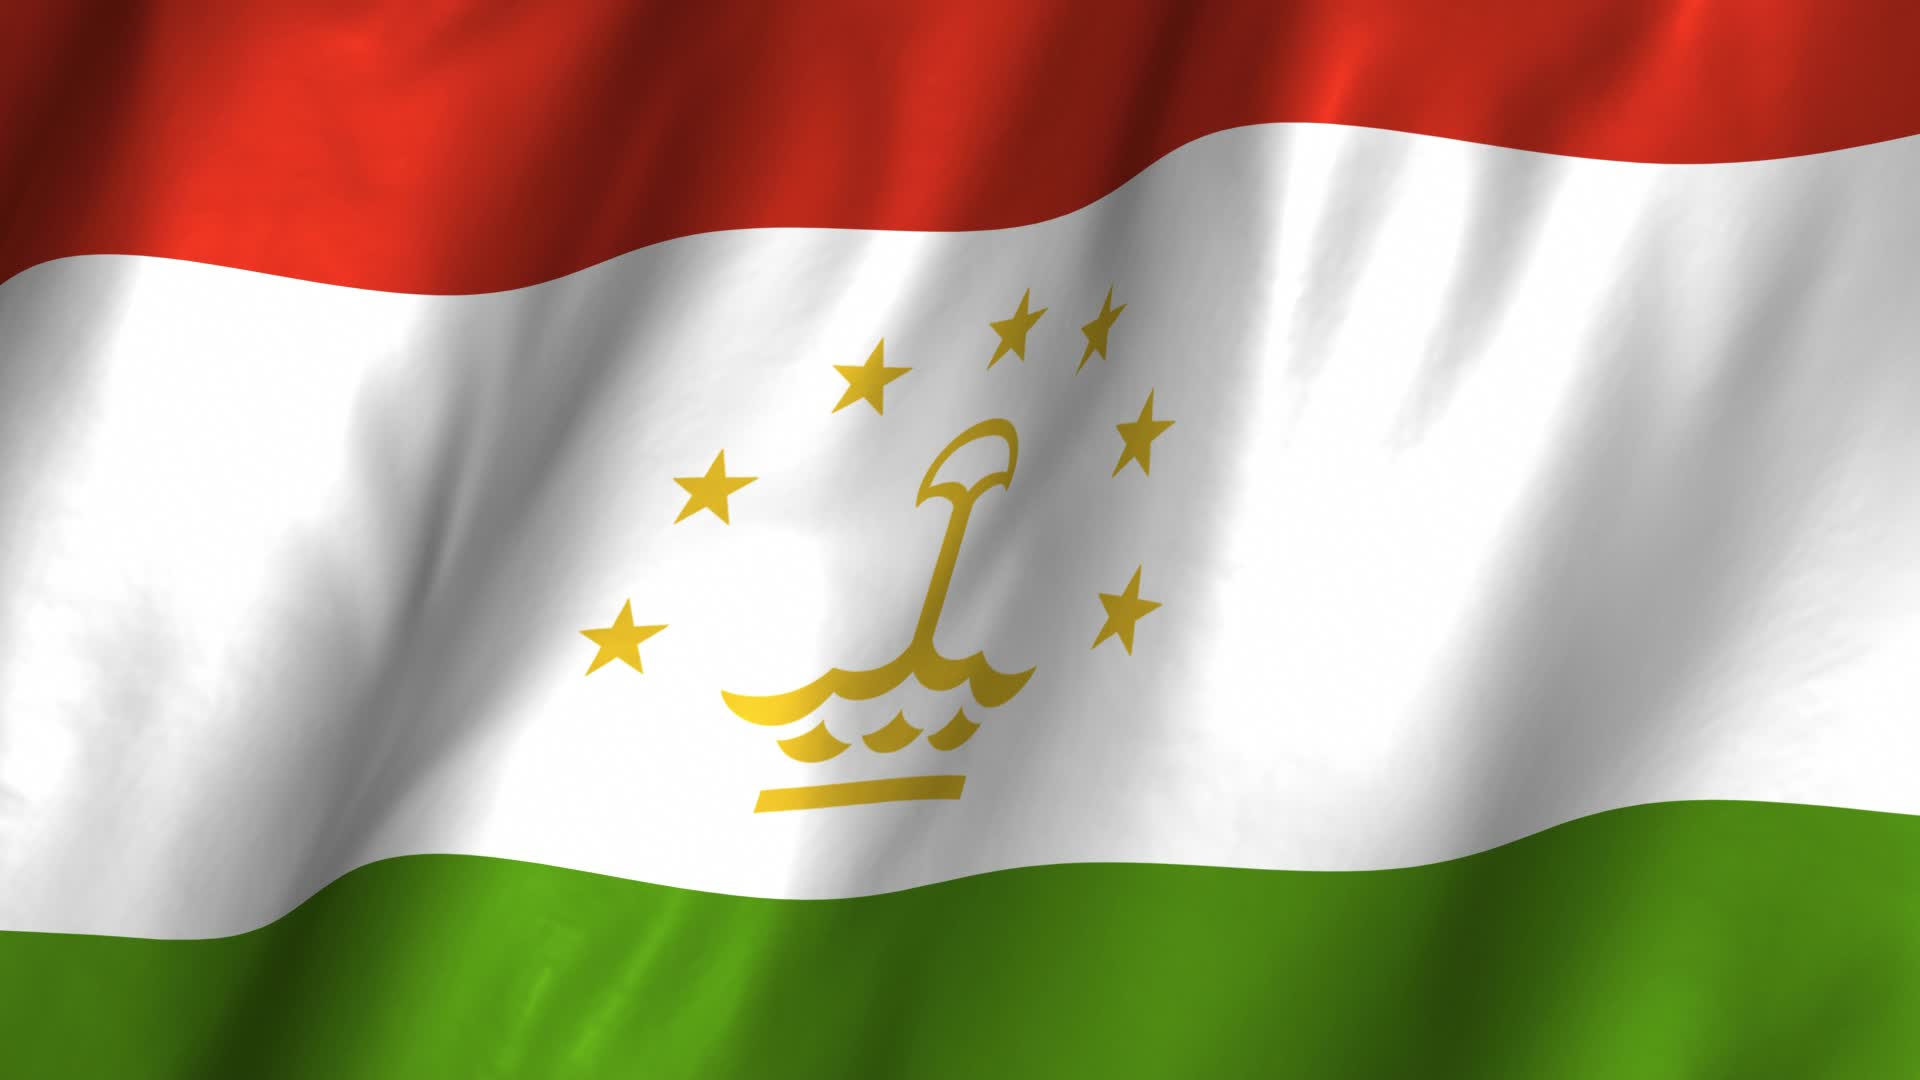 Как рисовать флаг таджикистана